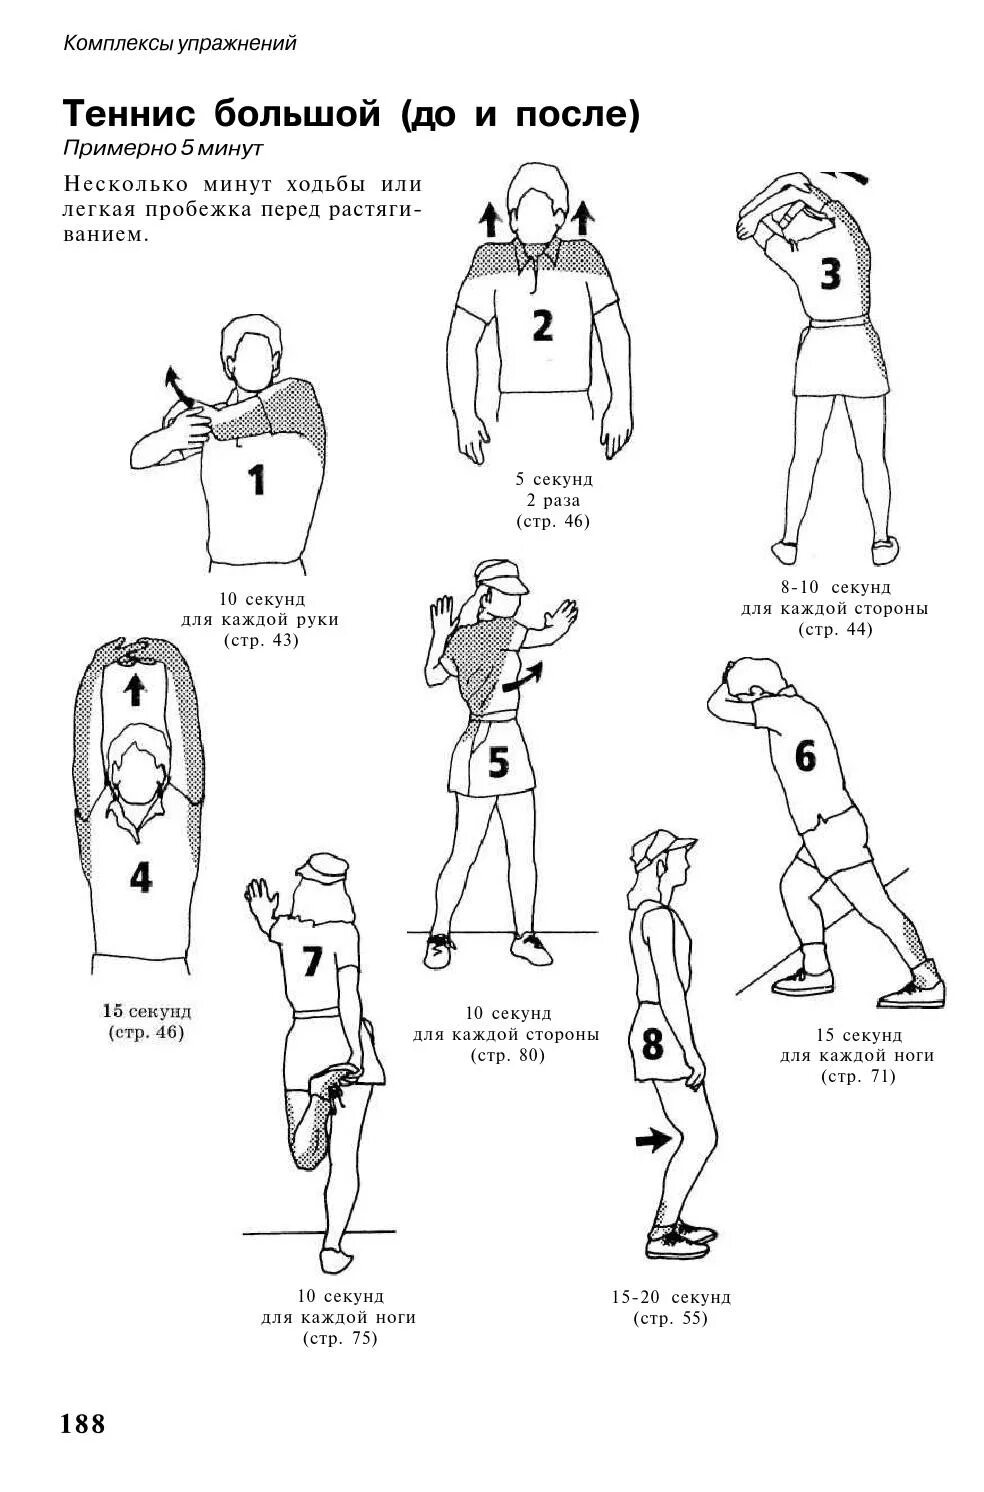 Разминка перед нагрузкой. Комплекс упражнений для разминки перед бегом. Схема разминки перед тренировкой. Разминка теннисиста перед тренировкой. Упражнения для разминки перед бегом на растягивание мышц.